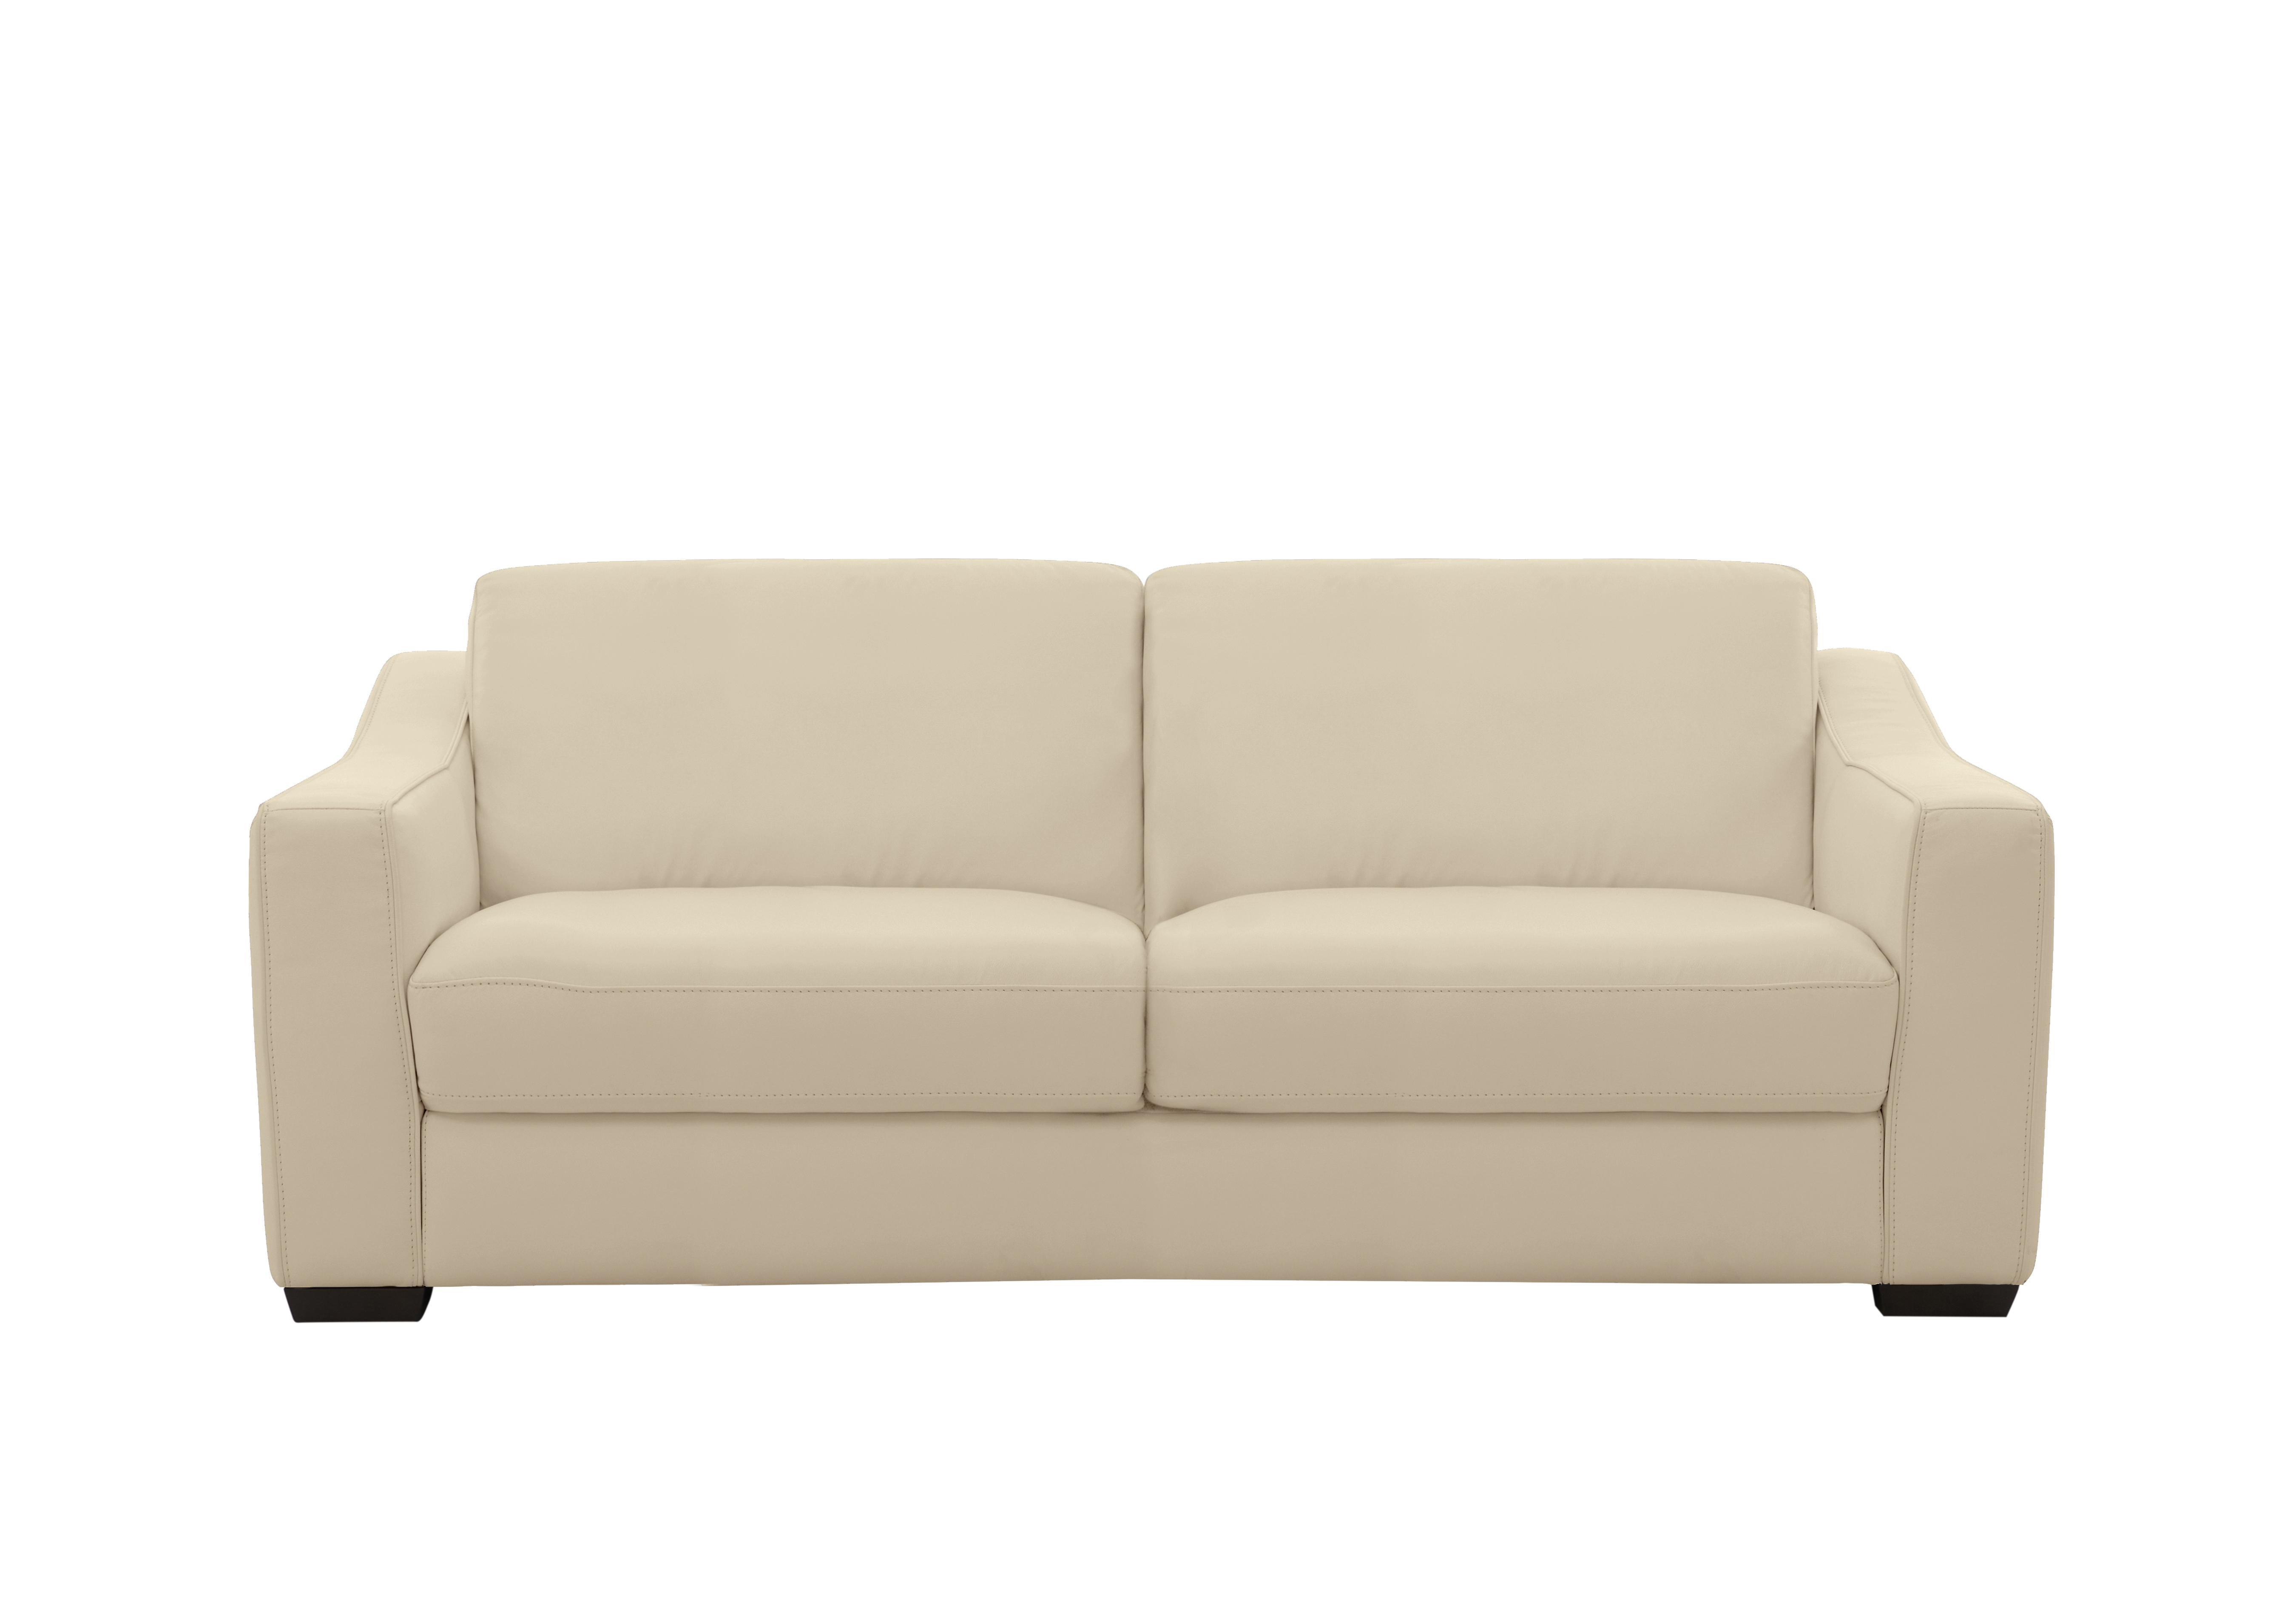 Optimus 3 Seater Leather Sofa in Bv-862c Bisque on Furniture Village